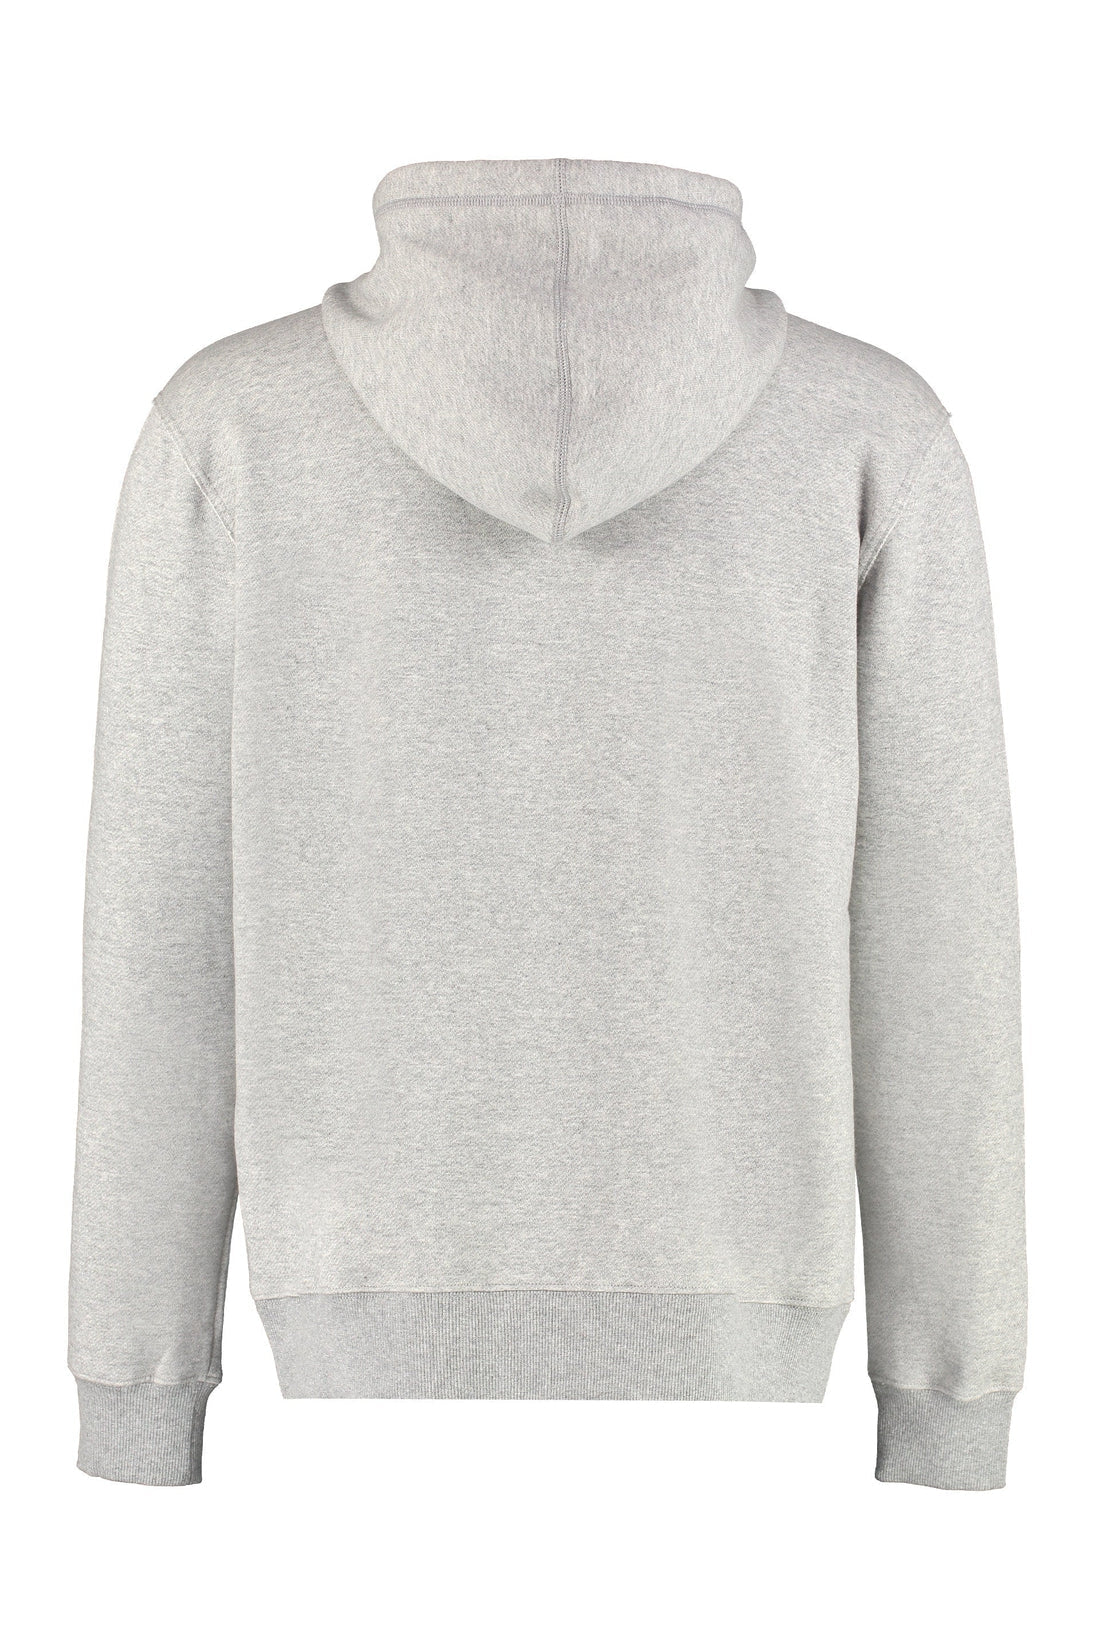 Lanvin-OUTLET-SALE-Embroidered cotton hoodie-ARCHIVIST